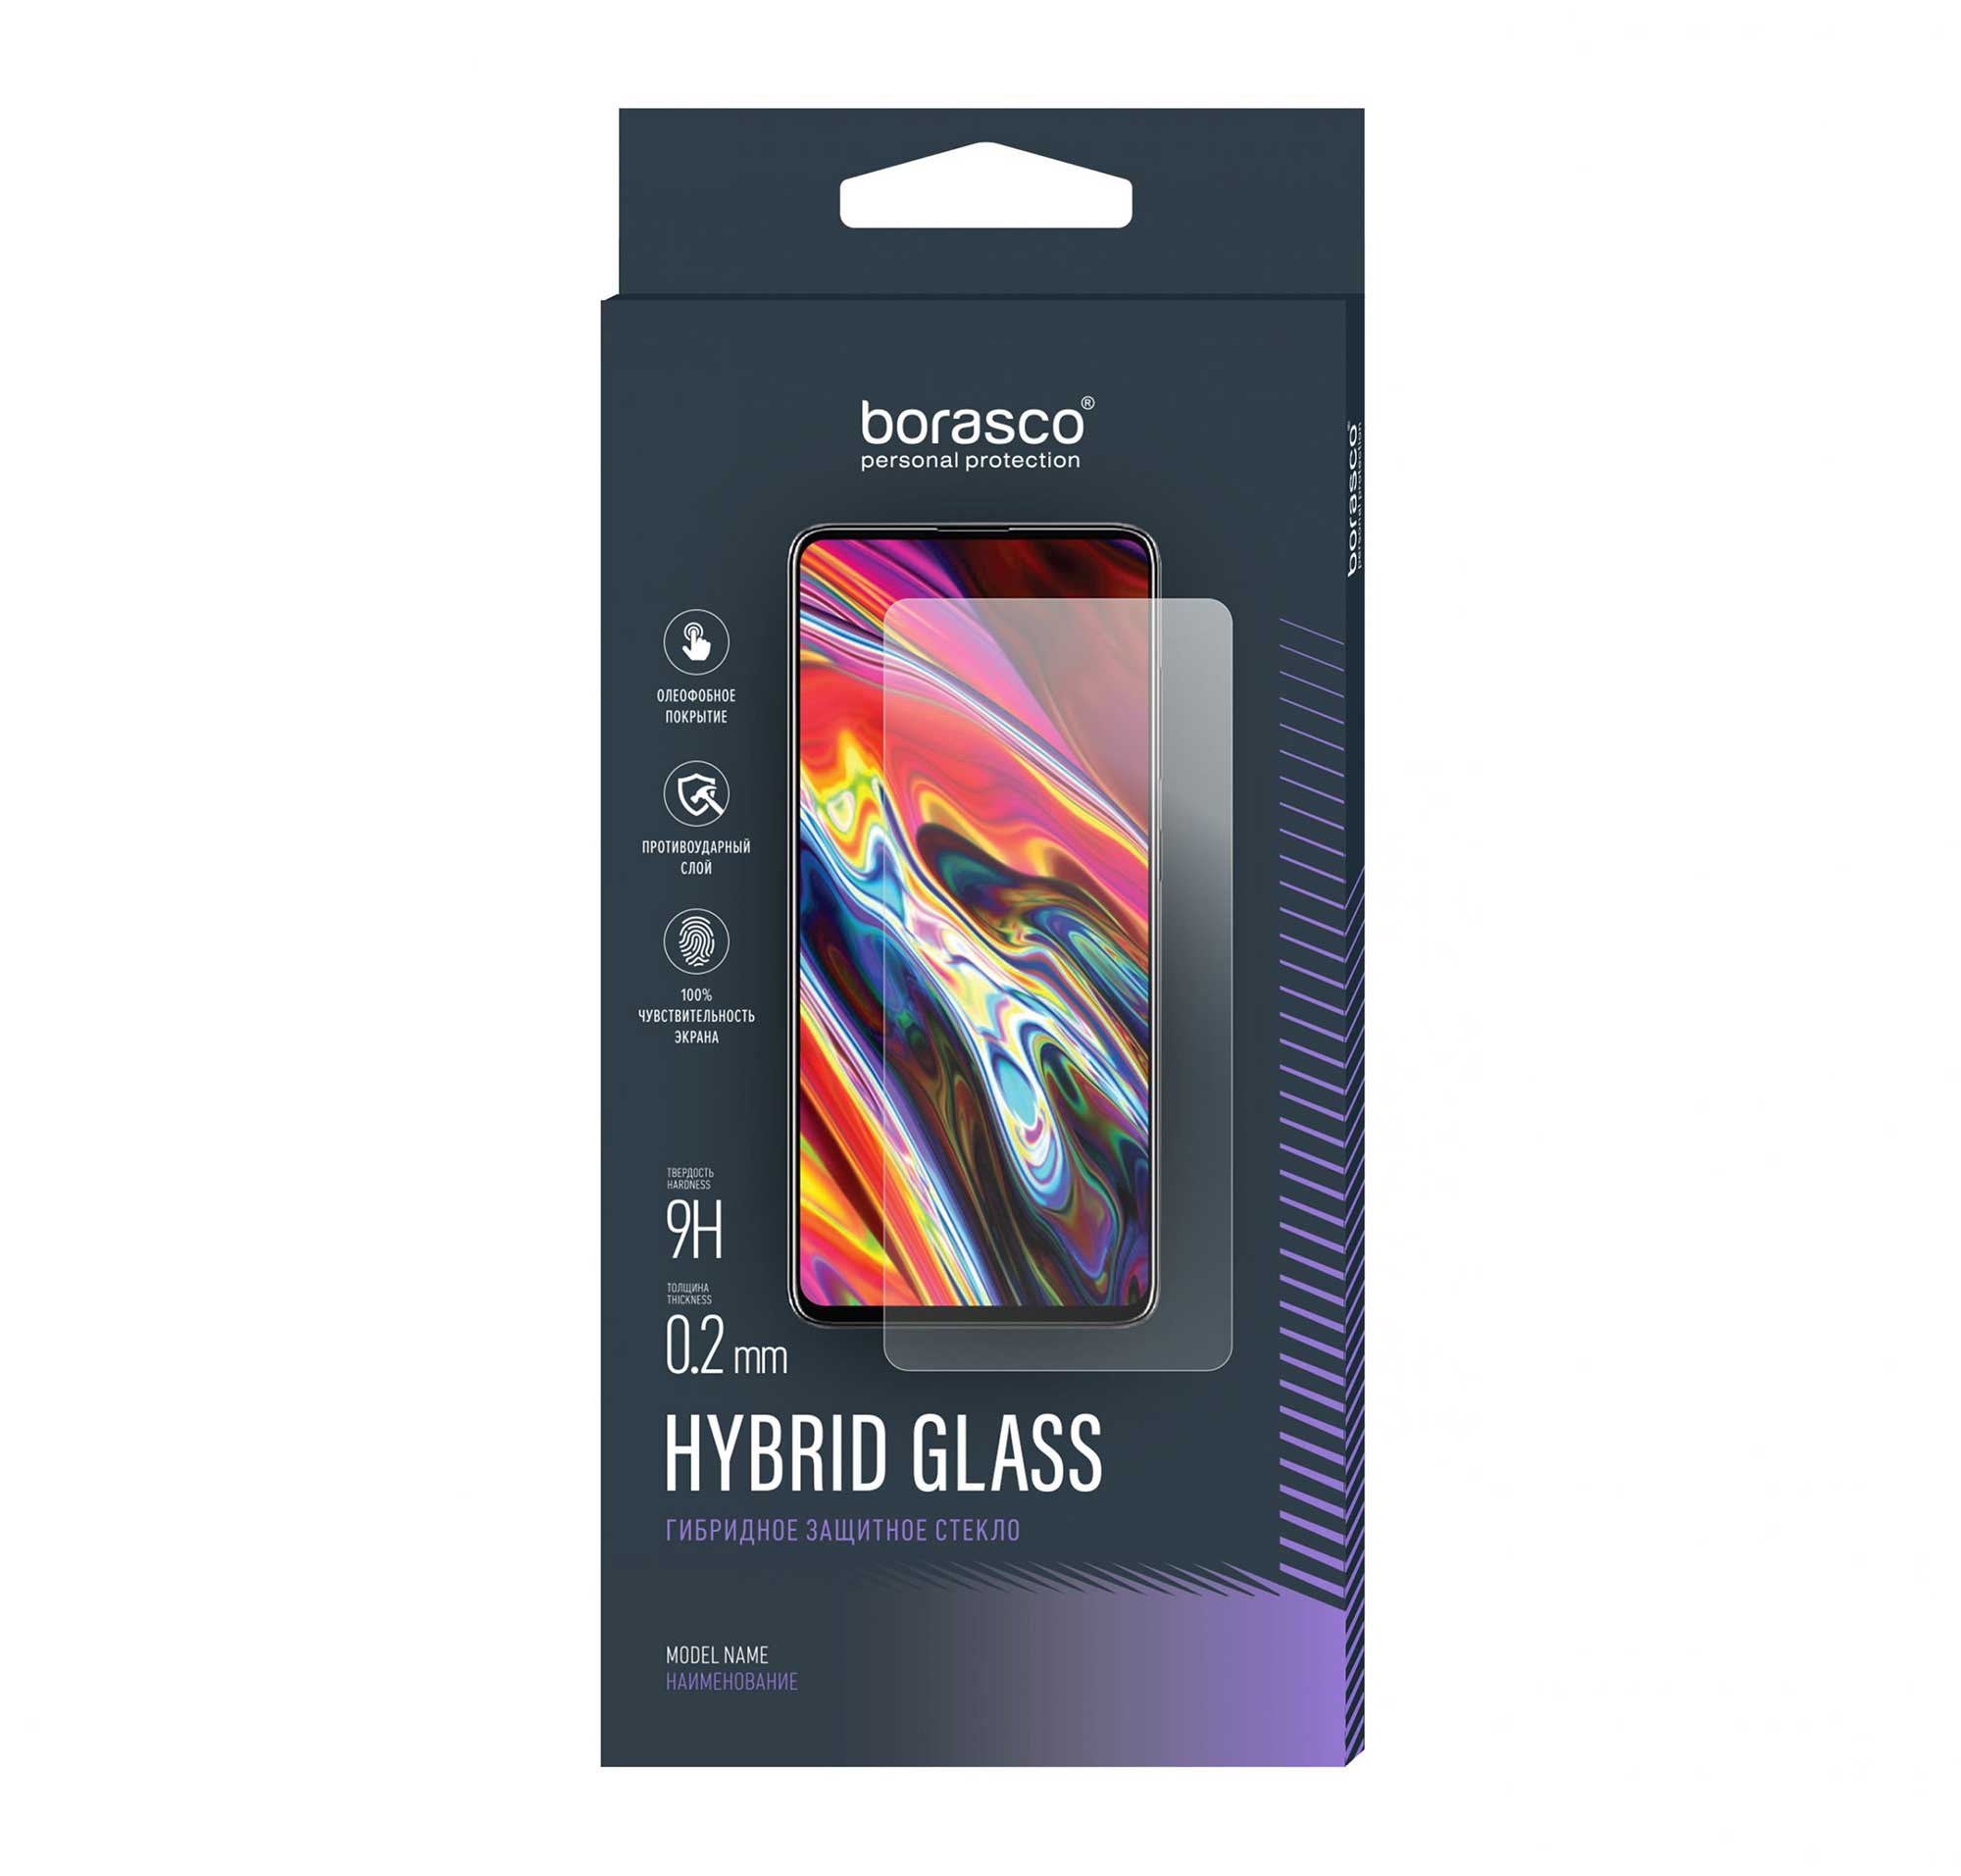 Защитное стекло BoraSCO Hybrid Glass для Sony Xperia XZ3 for sony xperia xz2 xperia xz2 compact xpfingerprint sensor flex cable for sony xperia xz2 xperia xz2 compact xperia xz3